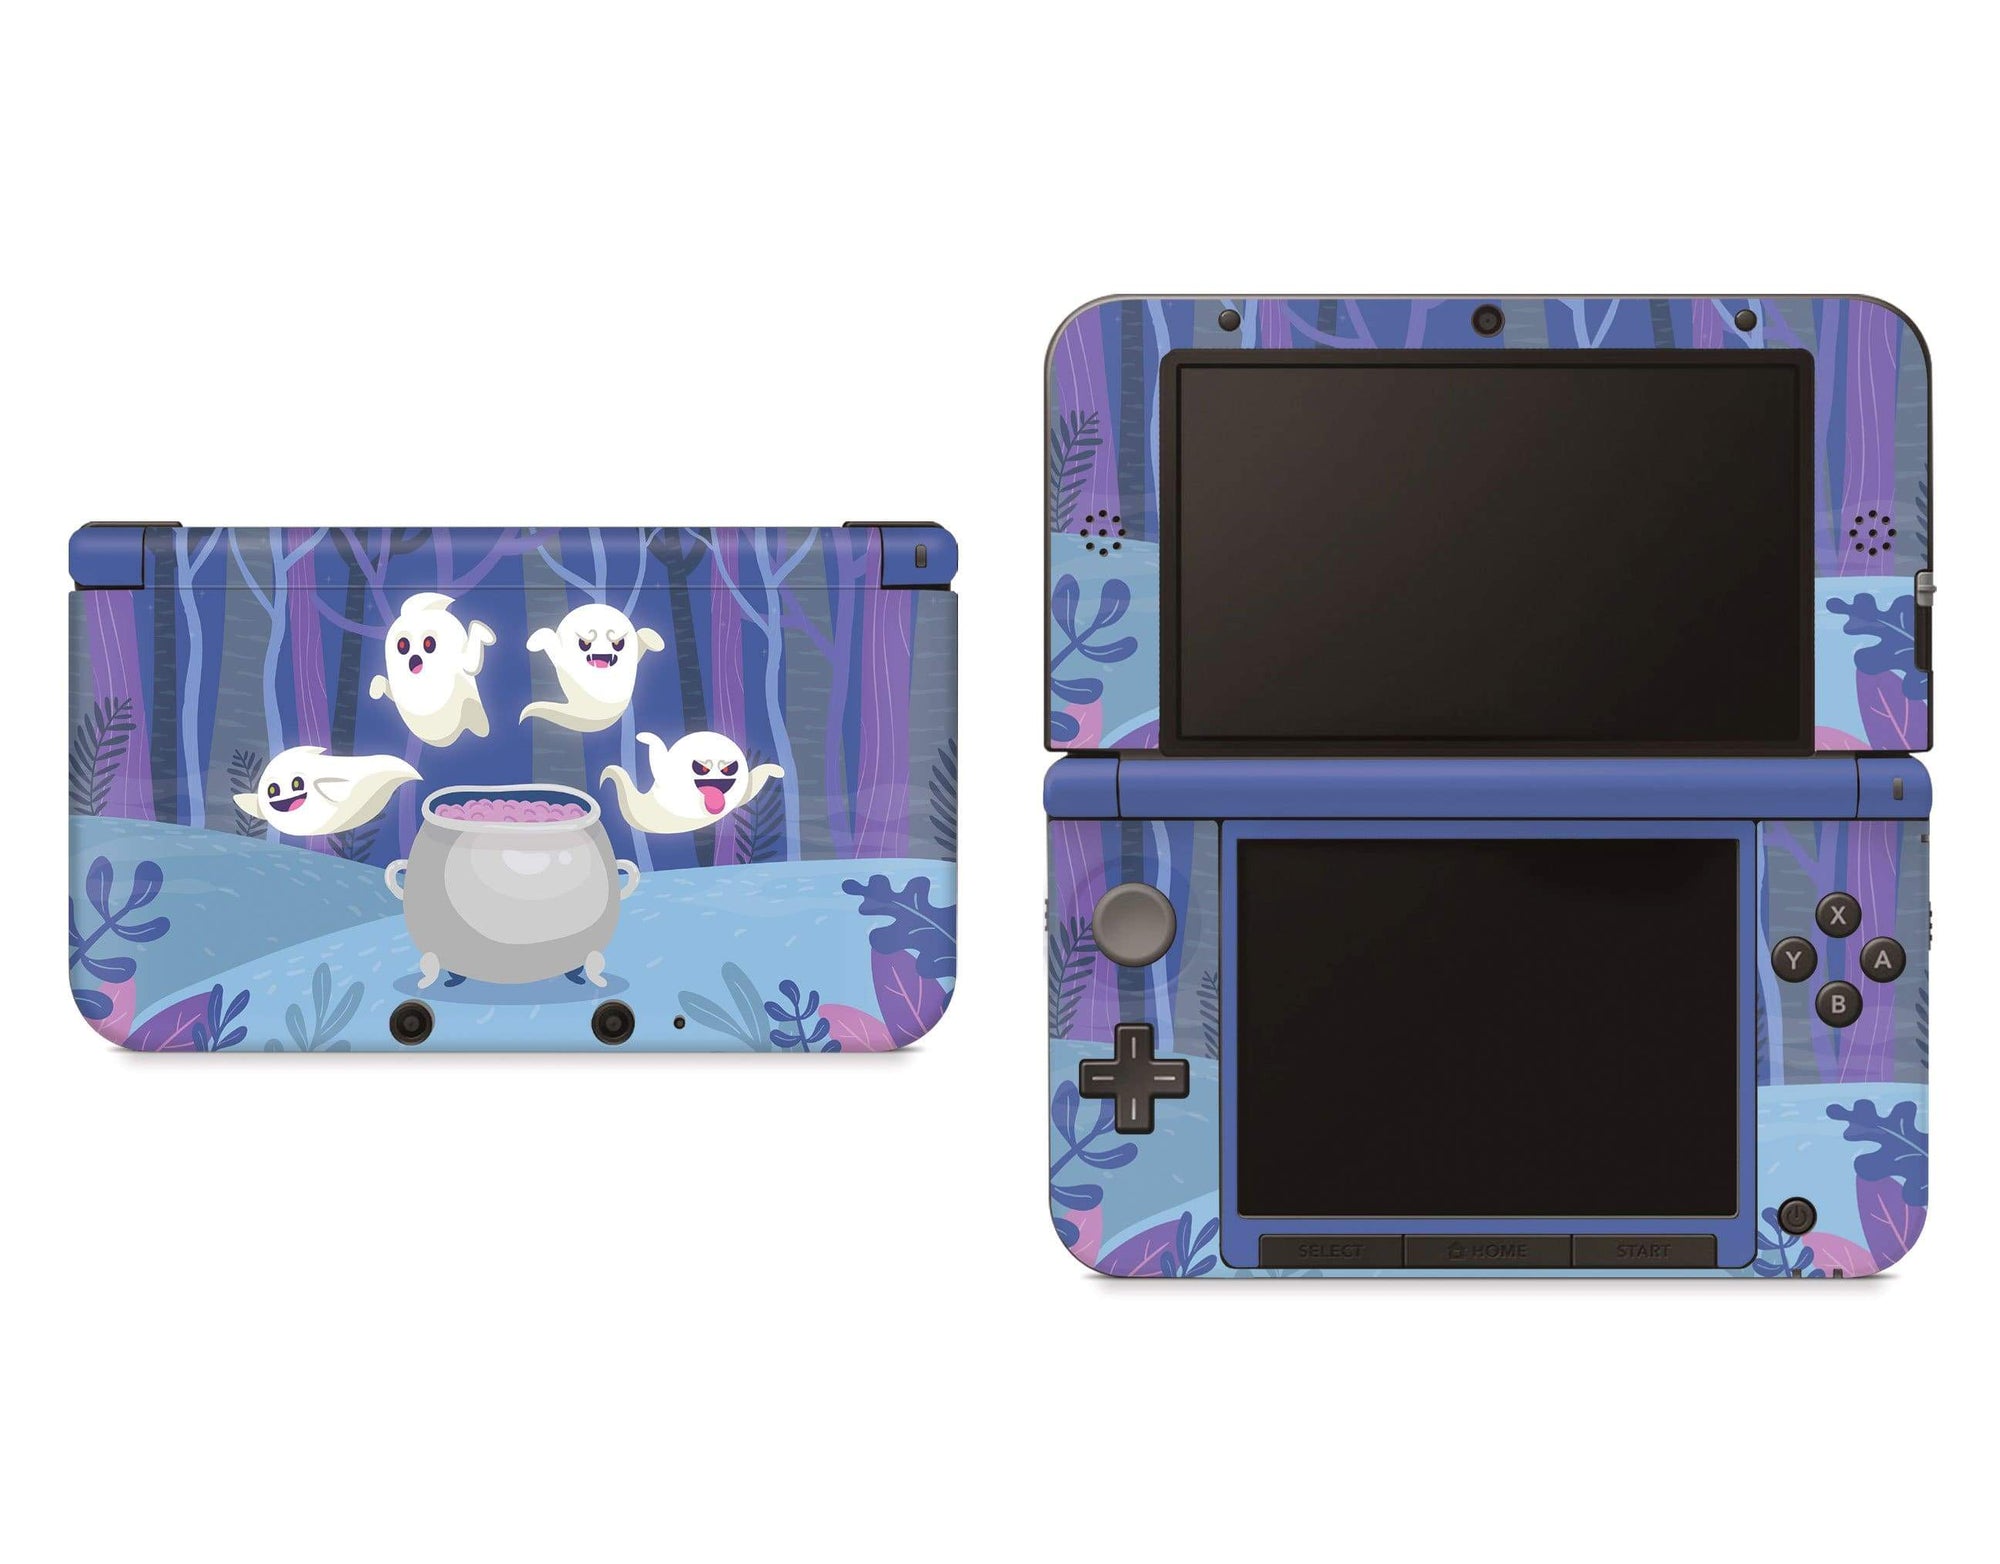 Krudt Rytmisk Countryside Spooky Ghosts Purple Edition Nintendo 3DS XL Skin - StickyBunny